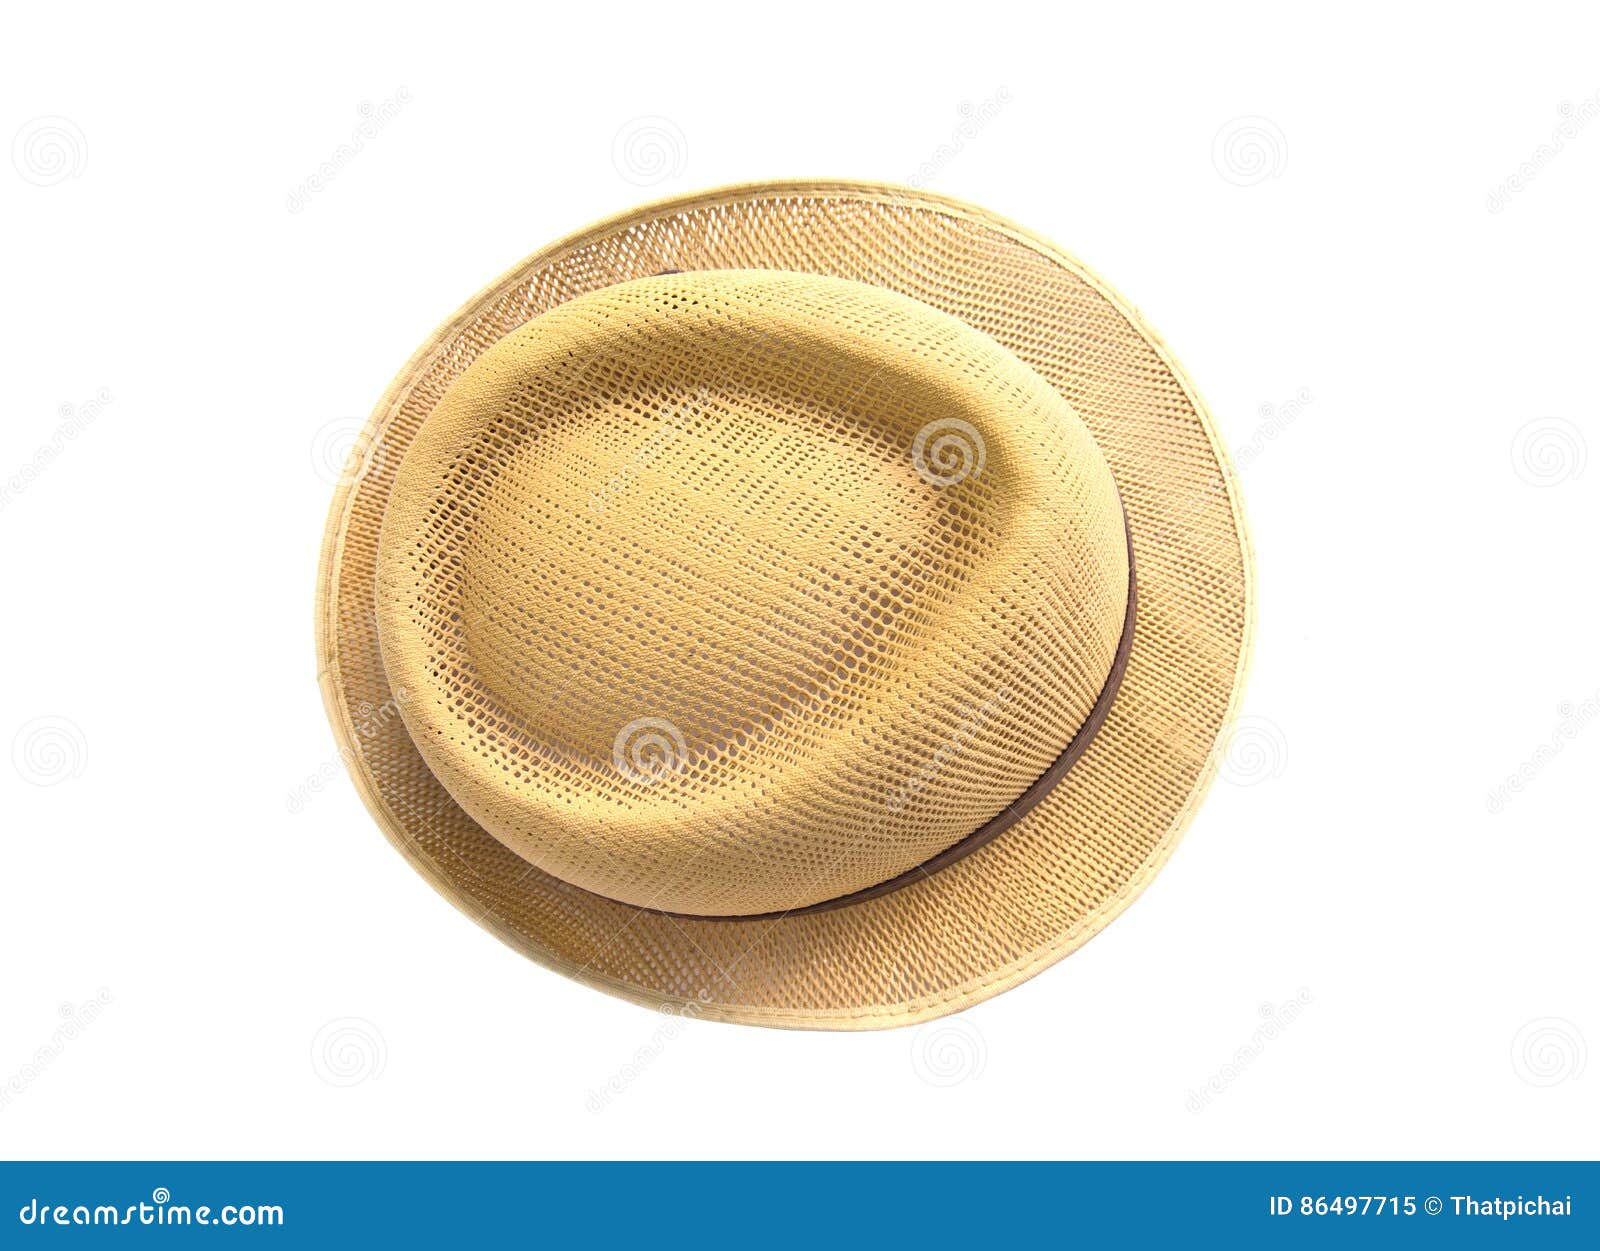 vintage straw hat fasion  on white background